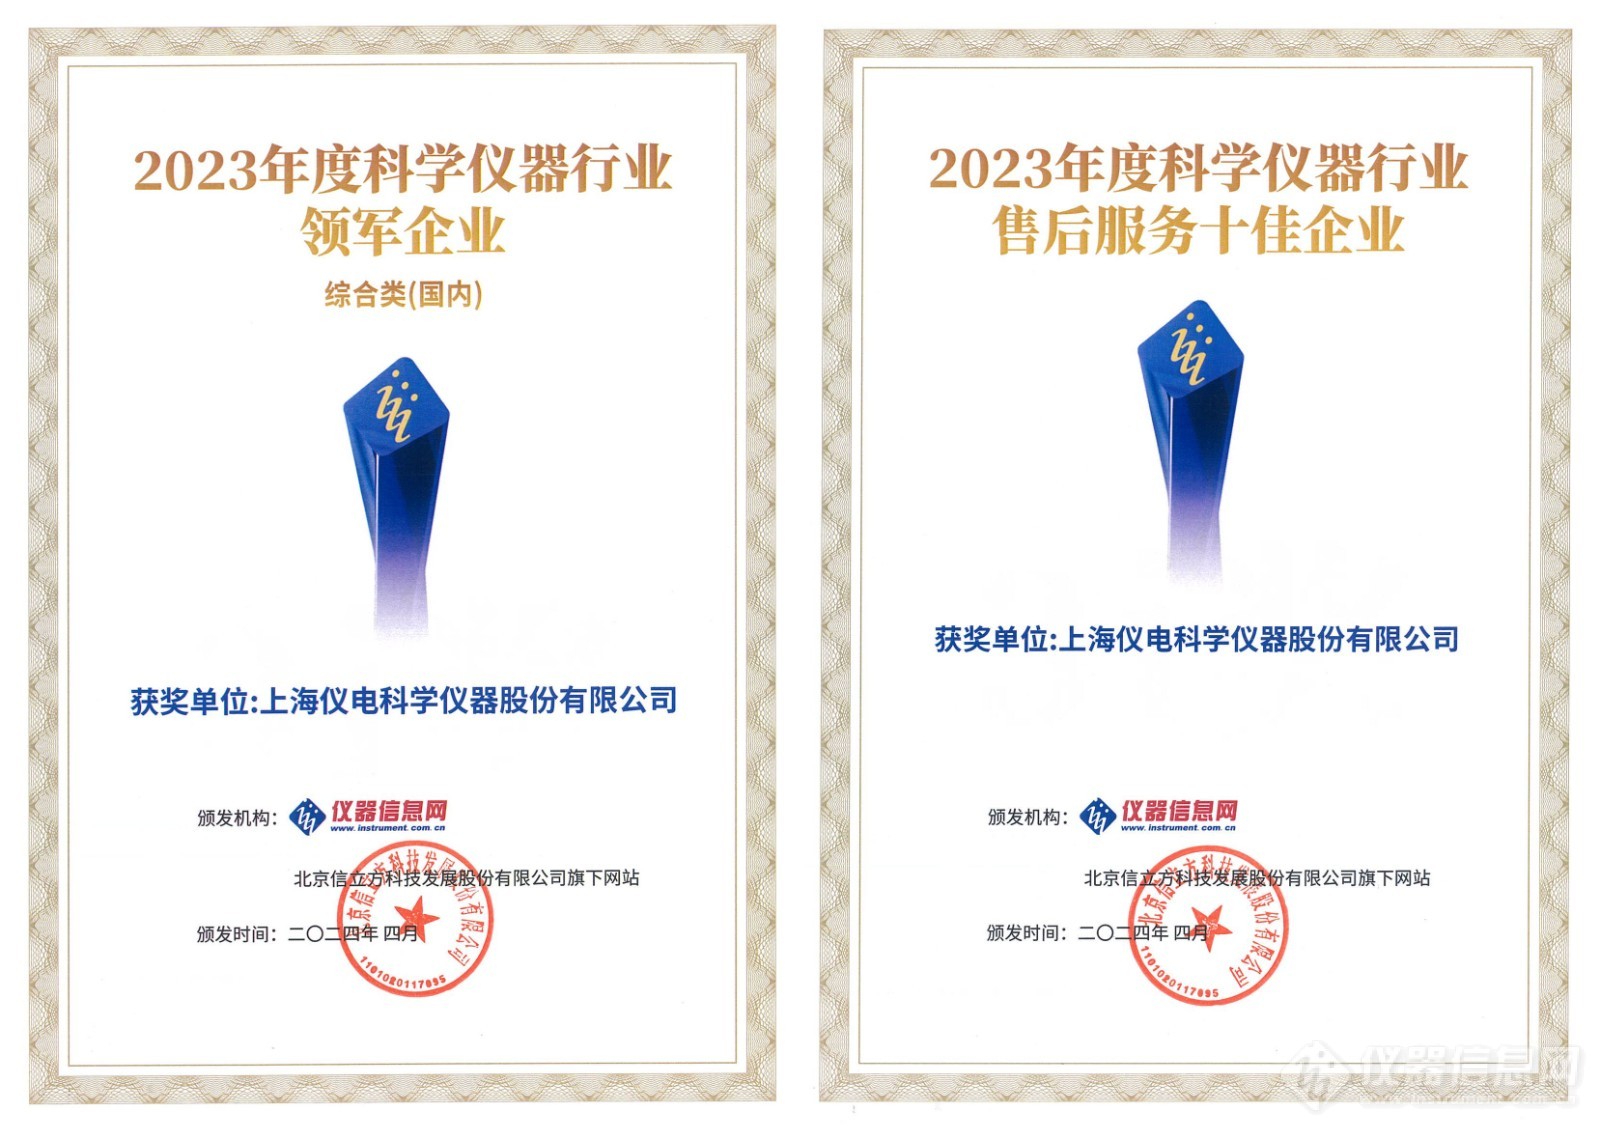 ACCSI2024，上海仪电科学仪器蝉联科学仪器行业多项奖项7.jpg